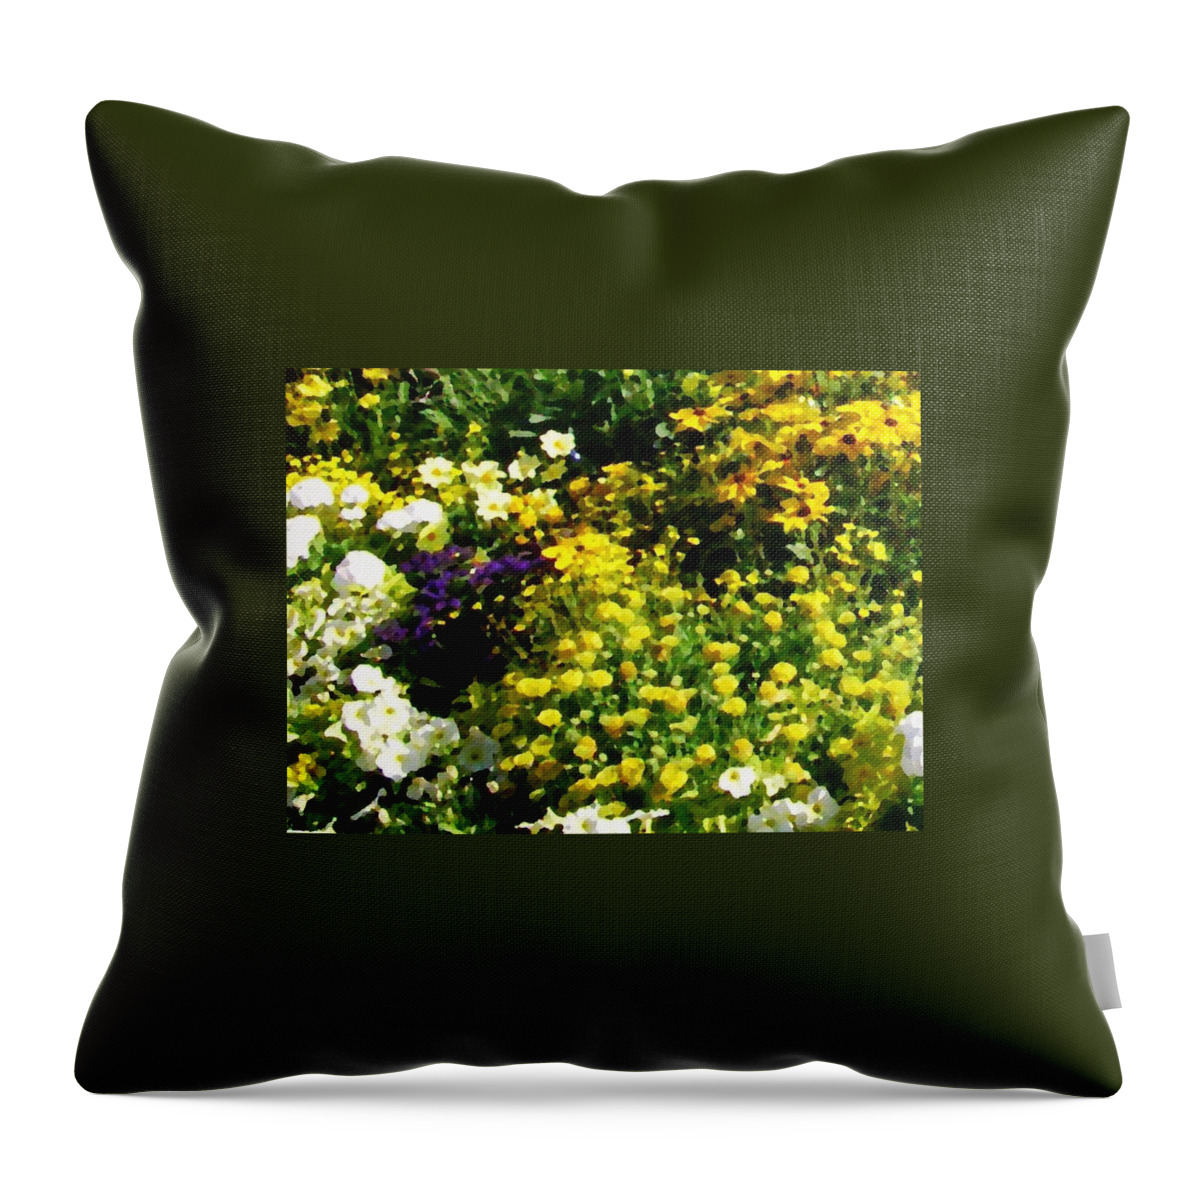 Luxembourg Garden Throw Pillow featuring the photograph Garden Flowers by Oleg Zavarzin